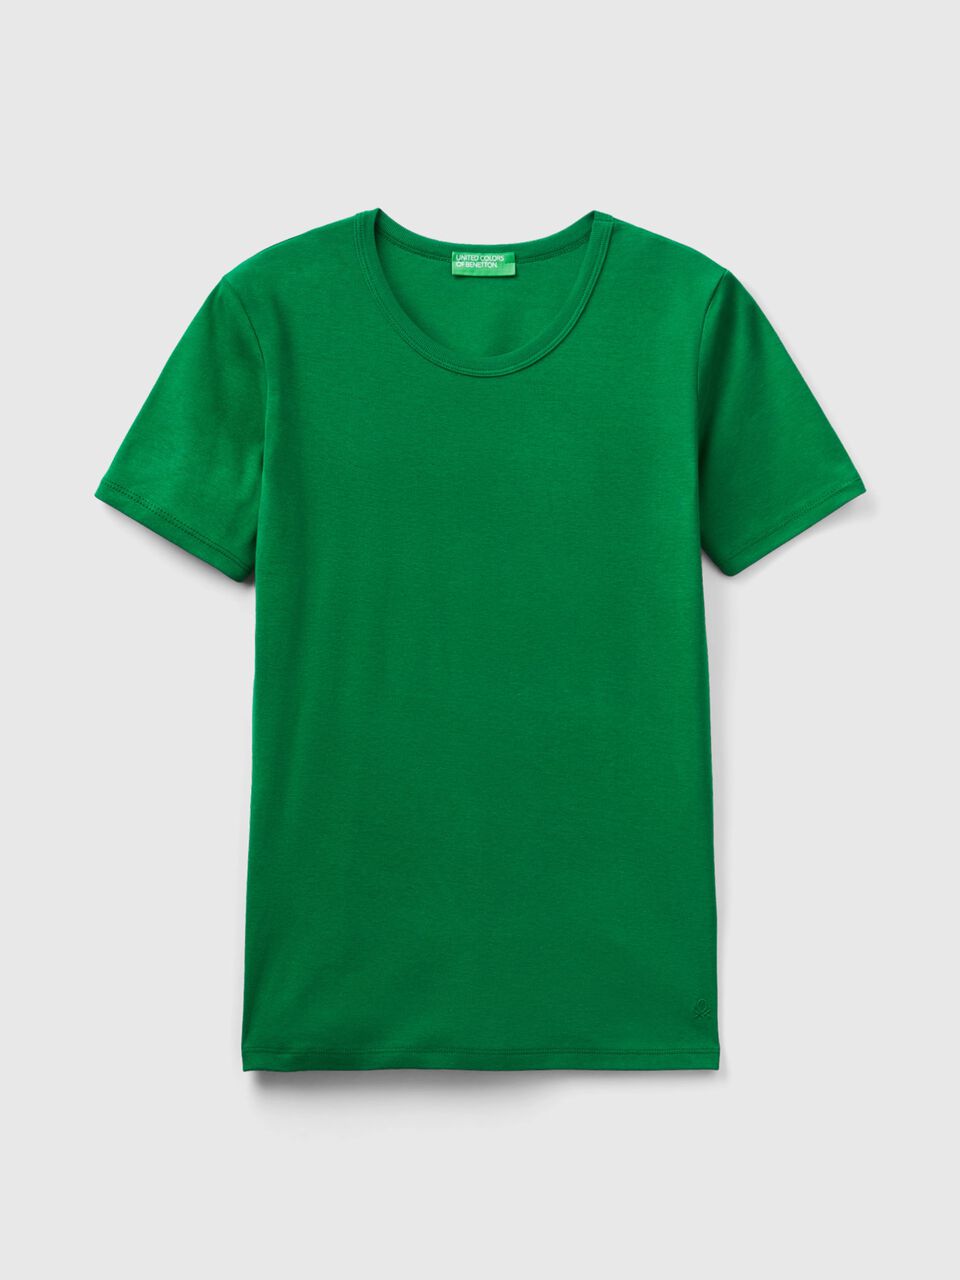 T-Shirt aus langfaseriger Baumwolle | Benetton - Grün